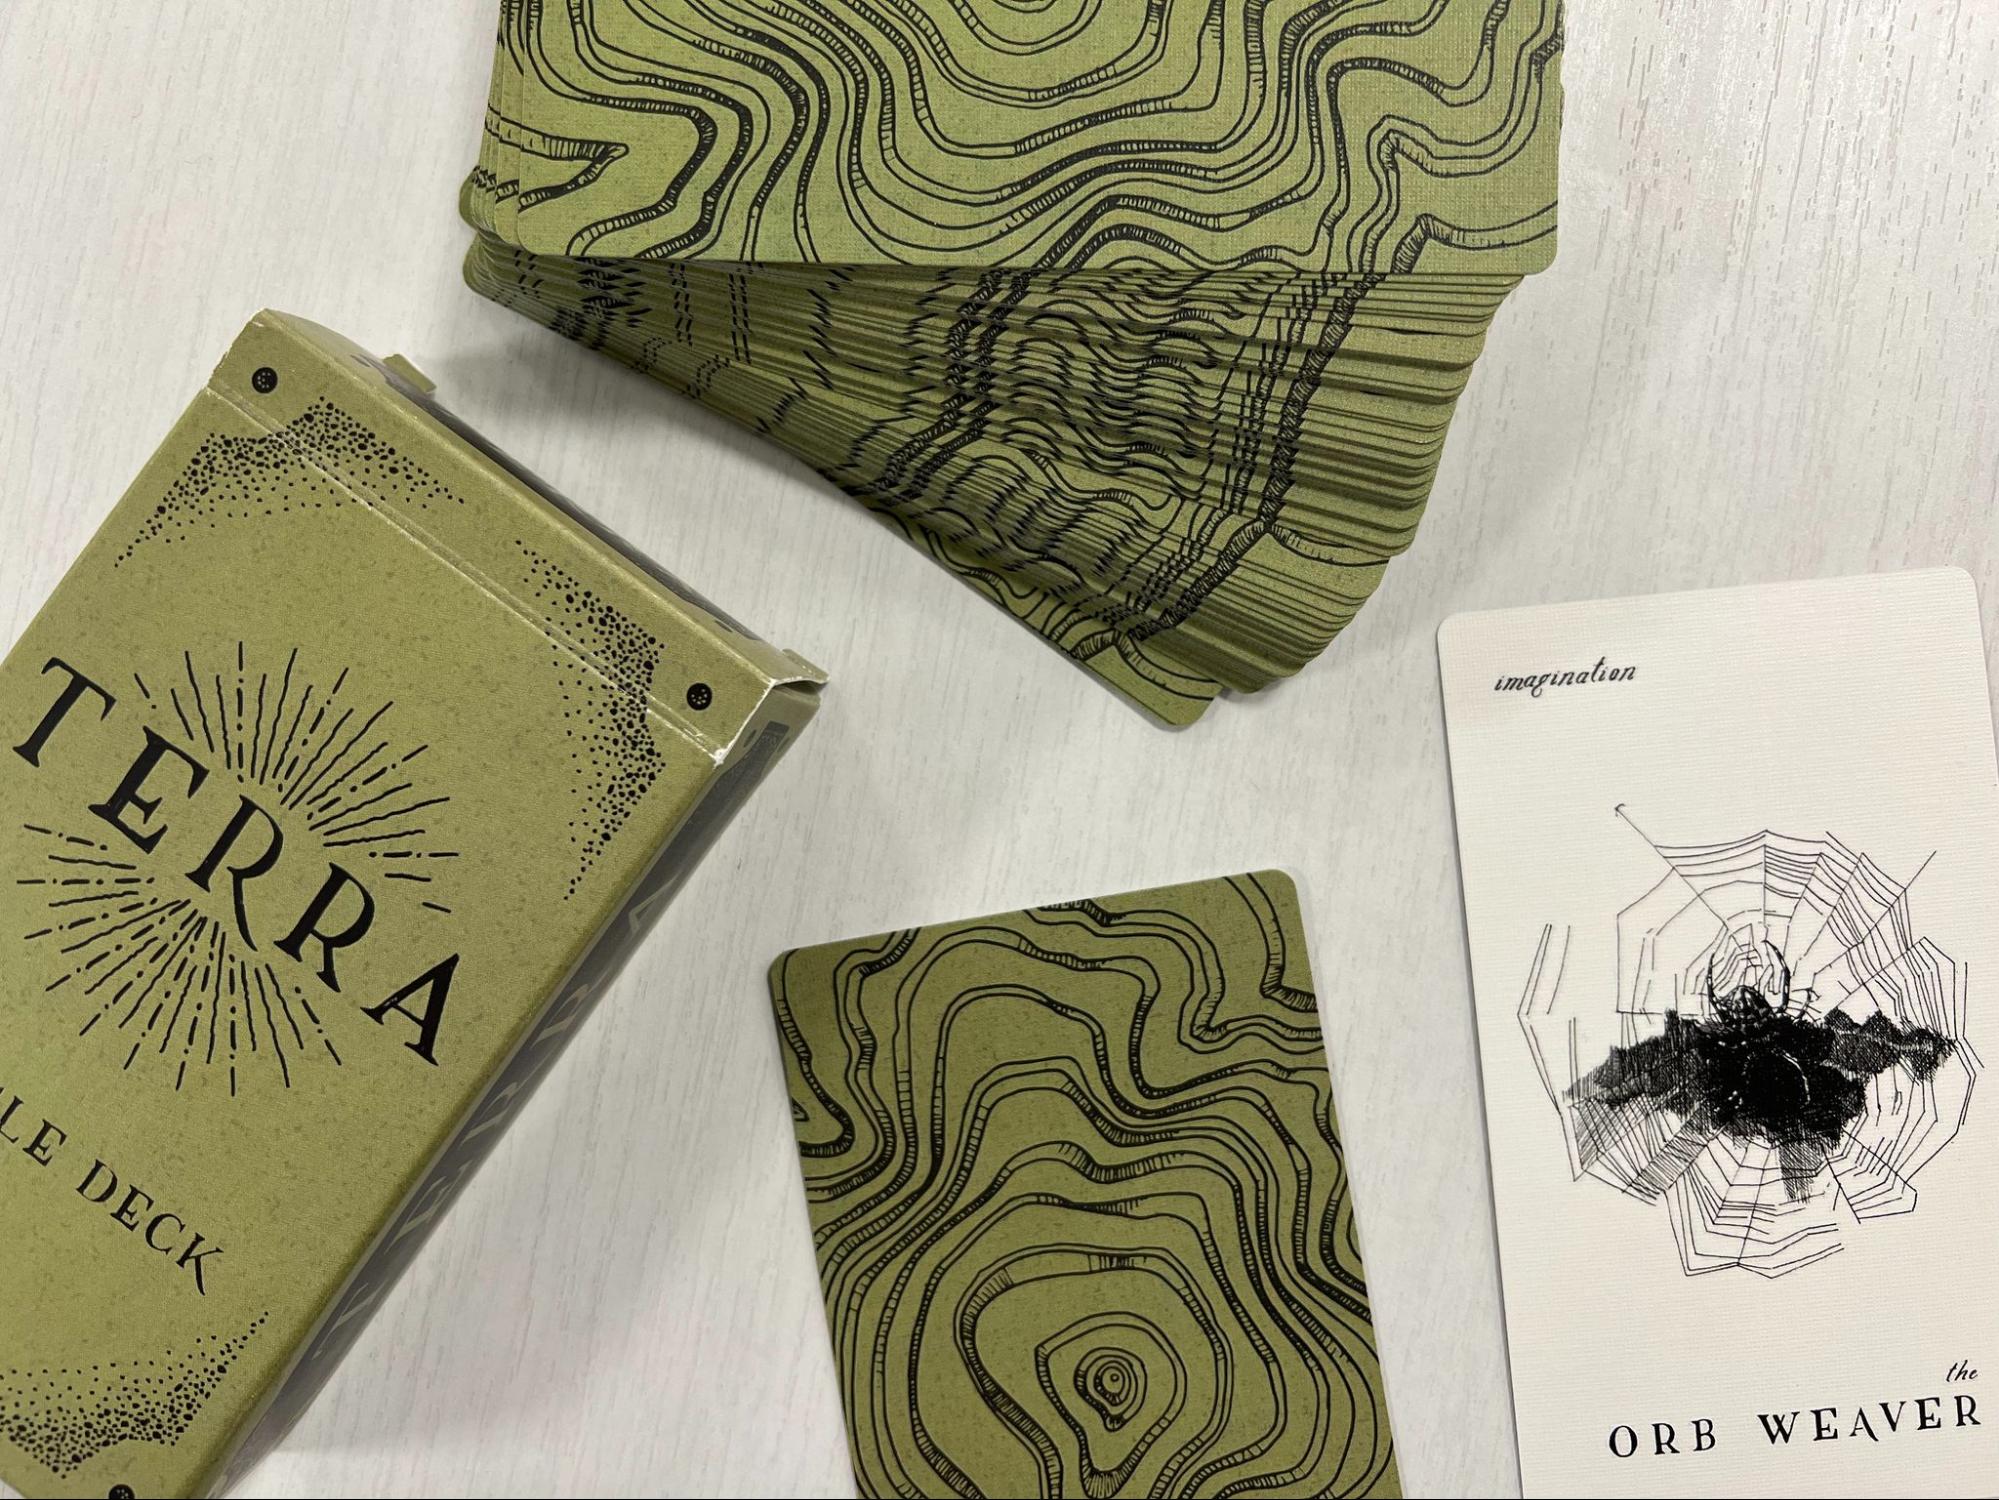 Shuffled Ink Tarot Cards